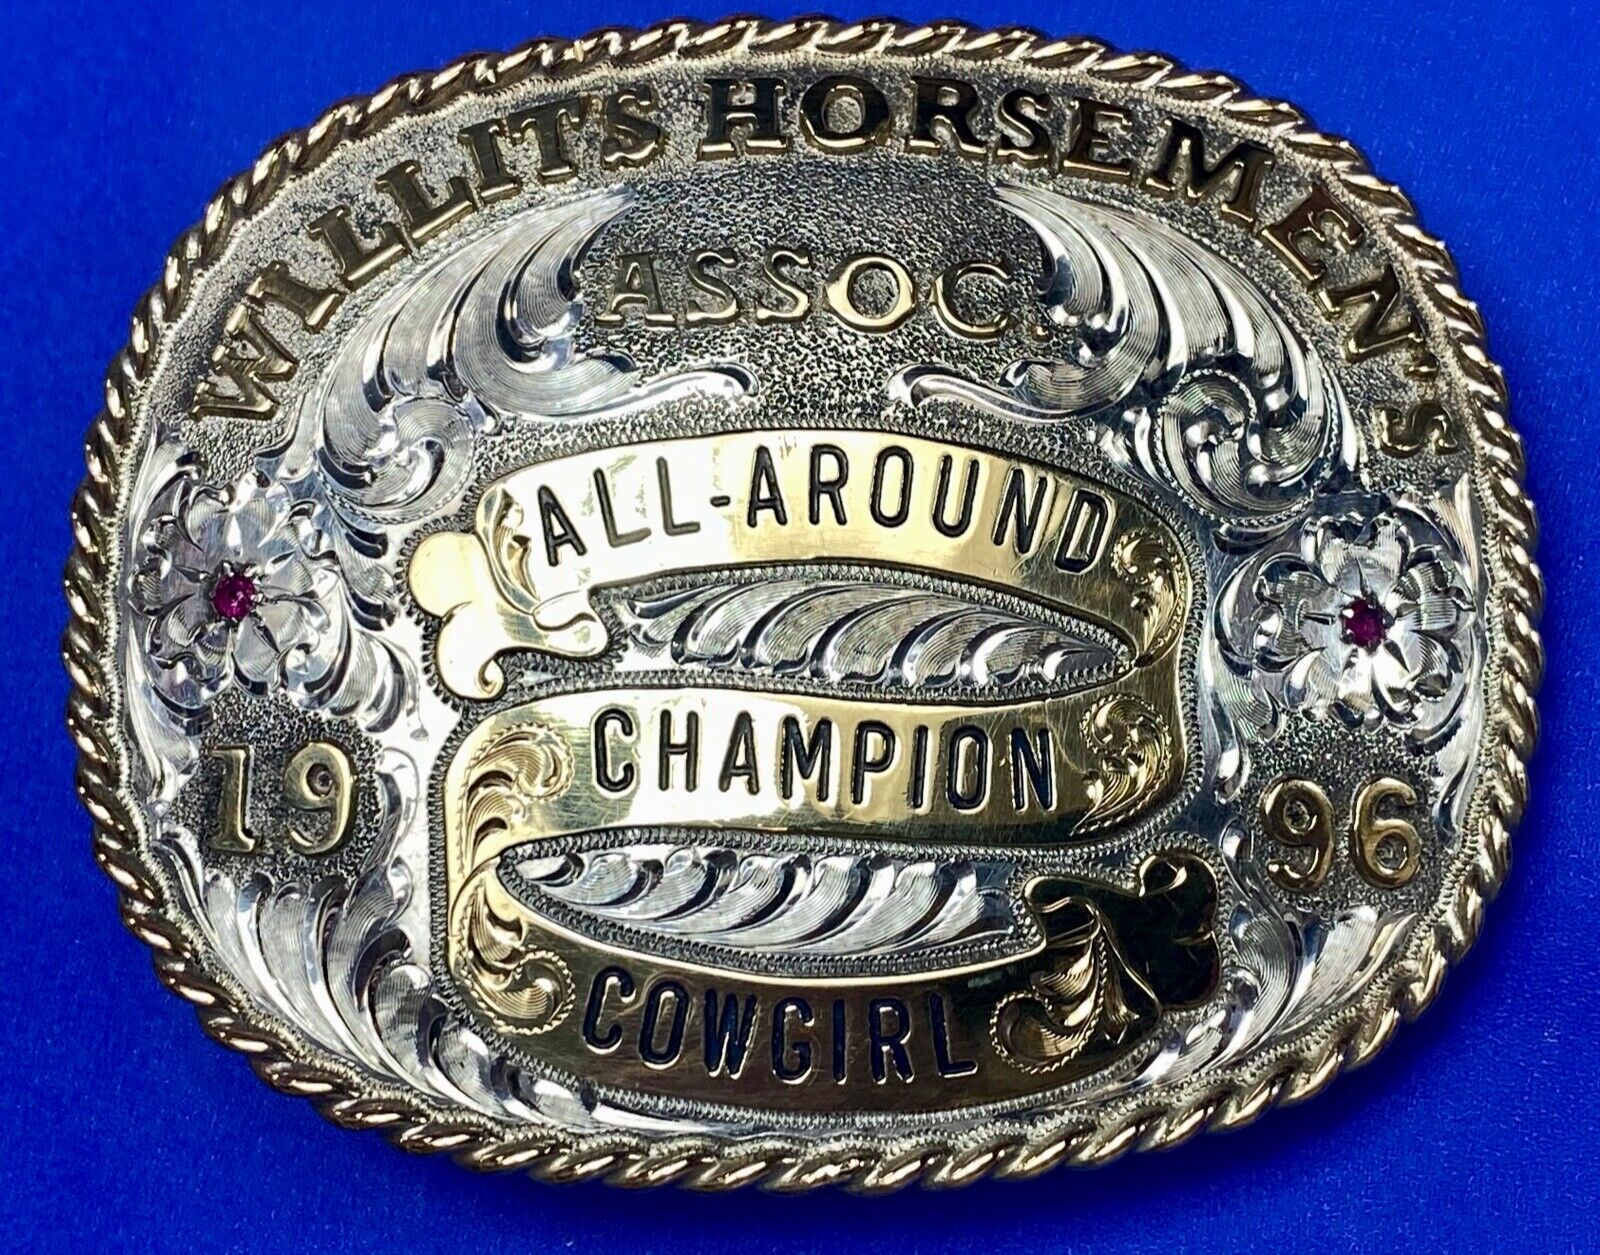 All Around Champion Cowgirl Willits Horsemen's Assoc 96 Trophy belt buckle by Gj